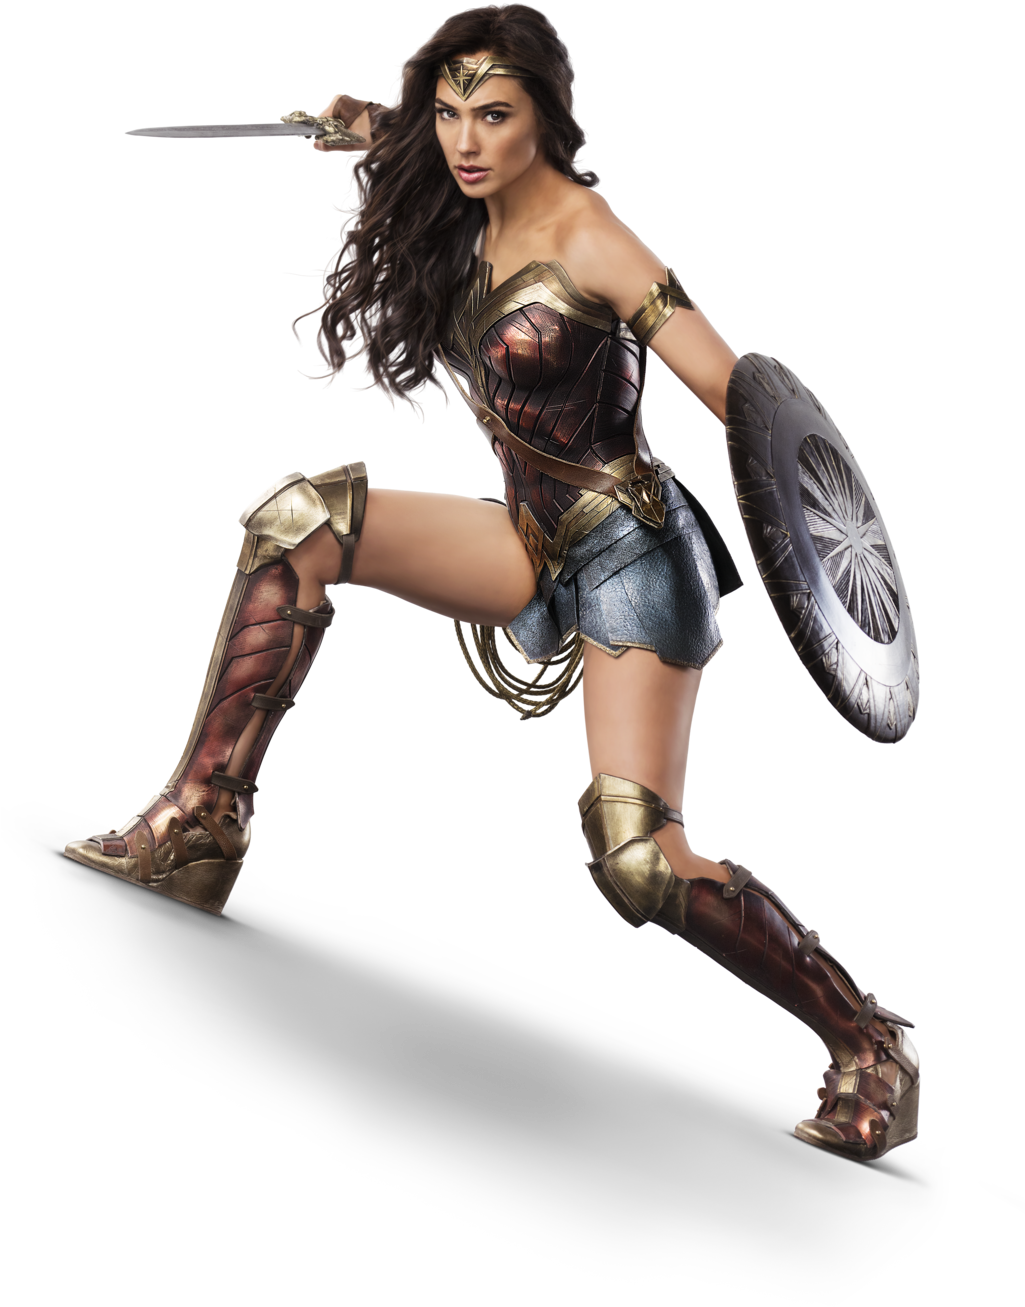 Wonder Woman By Hz-designs - Gal Gadot Wonder Woman Full Body (1024x1535)